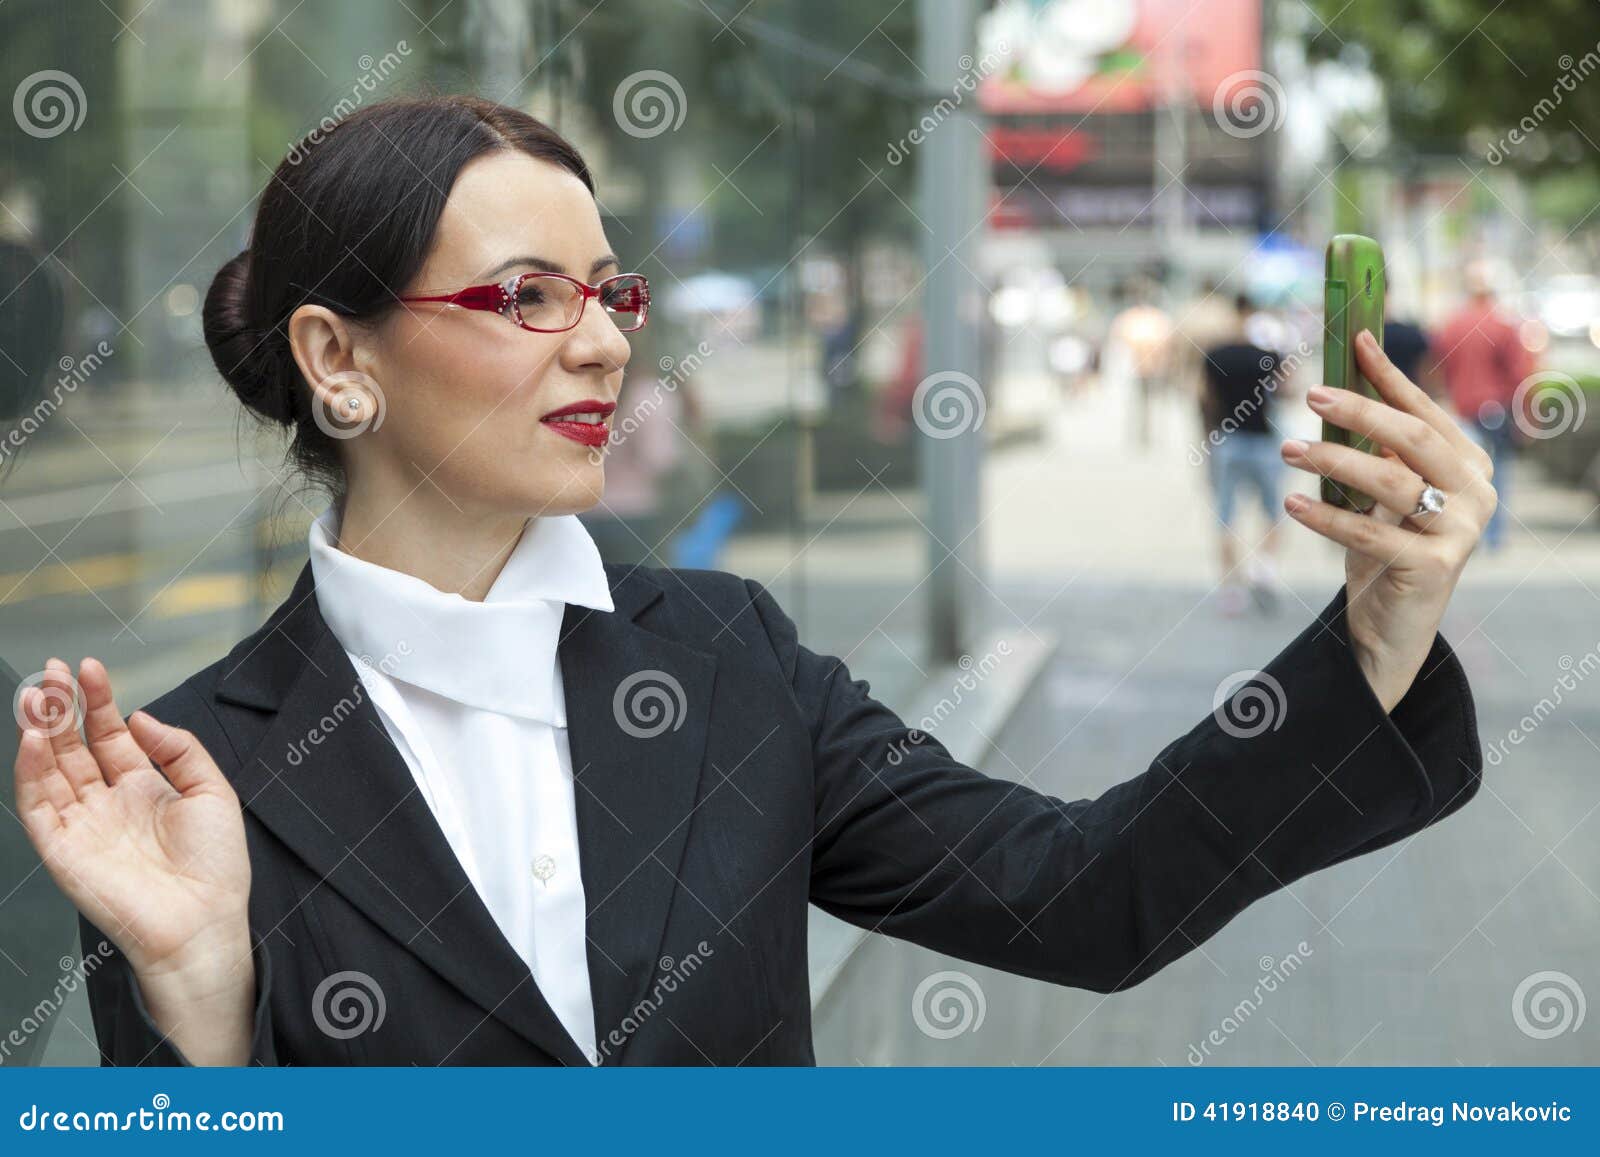 smiling woman capturing a self shot